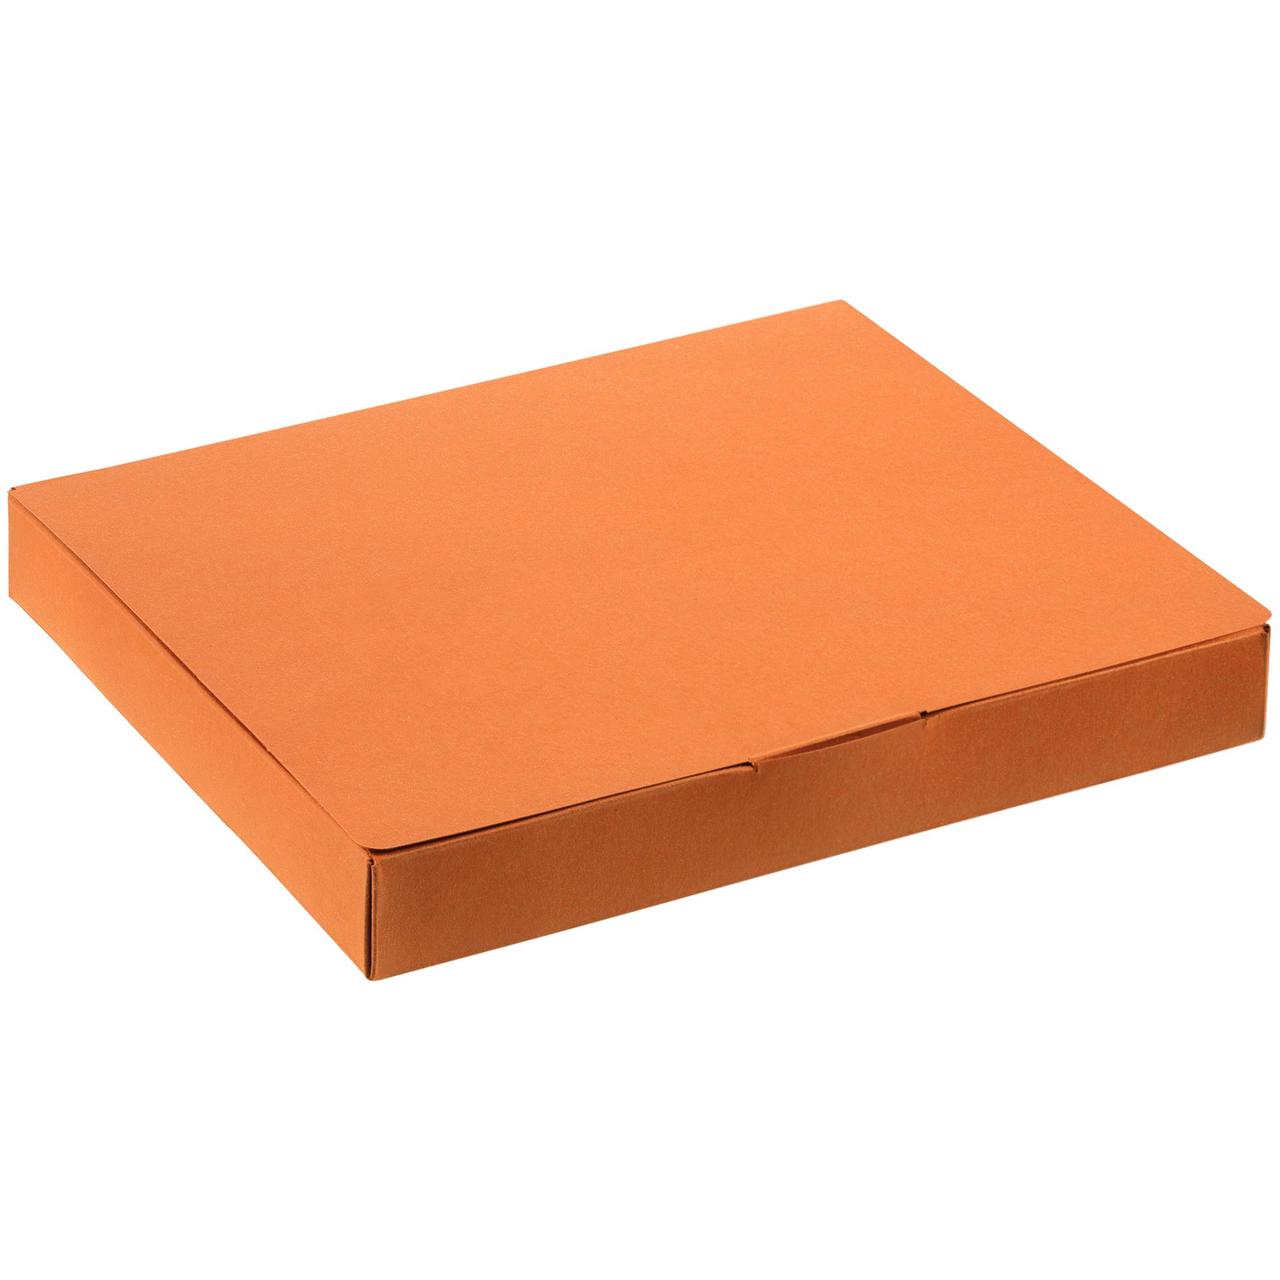 Коробка самосборная Flacky, оранжевая (артикул 12208.20), фото 1